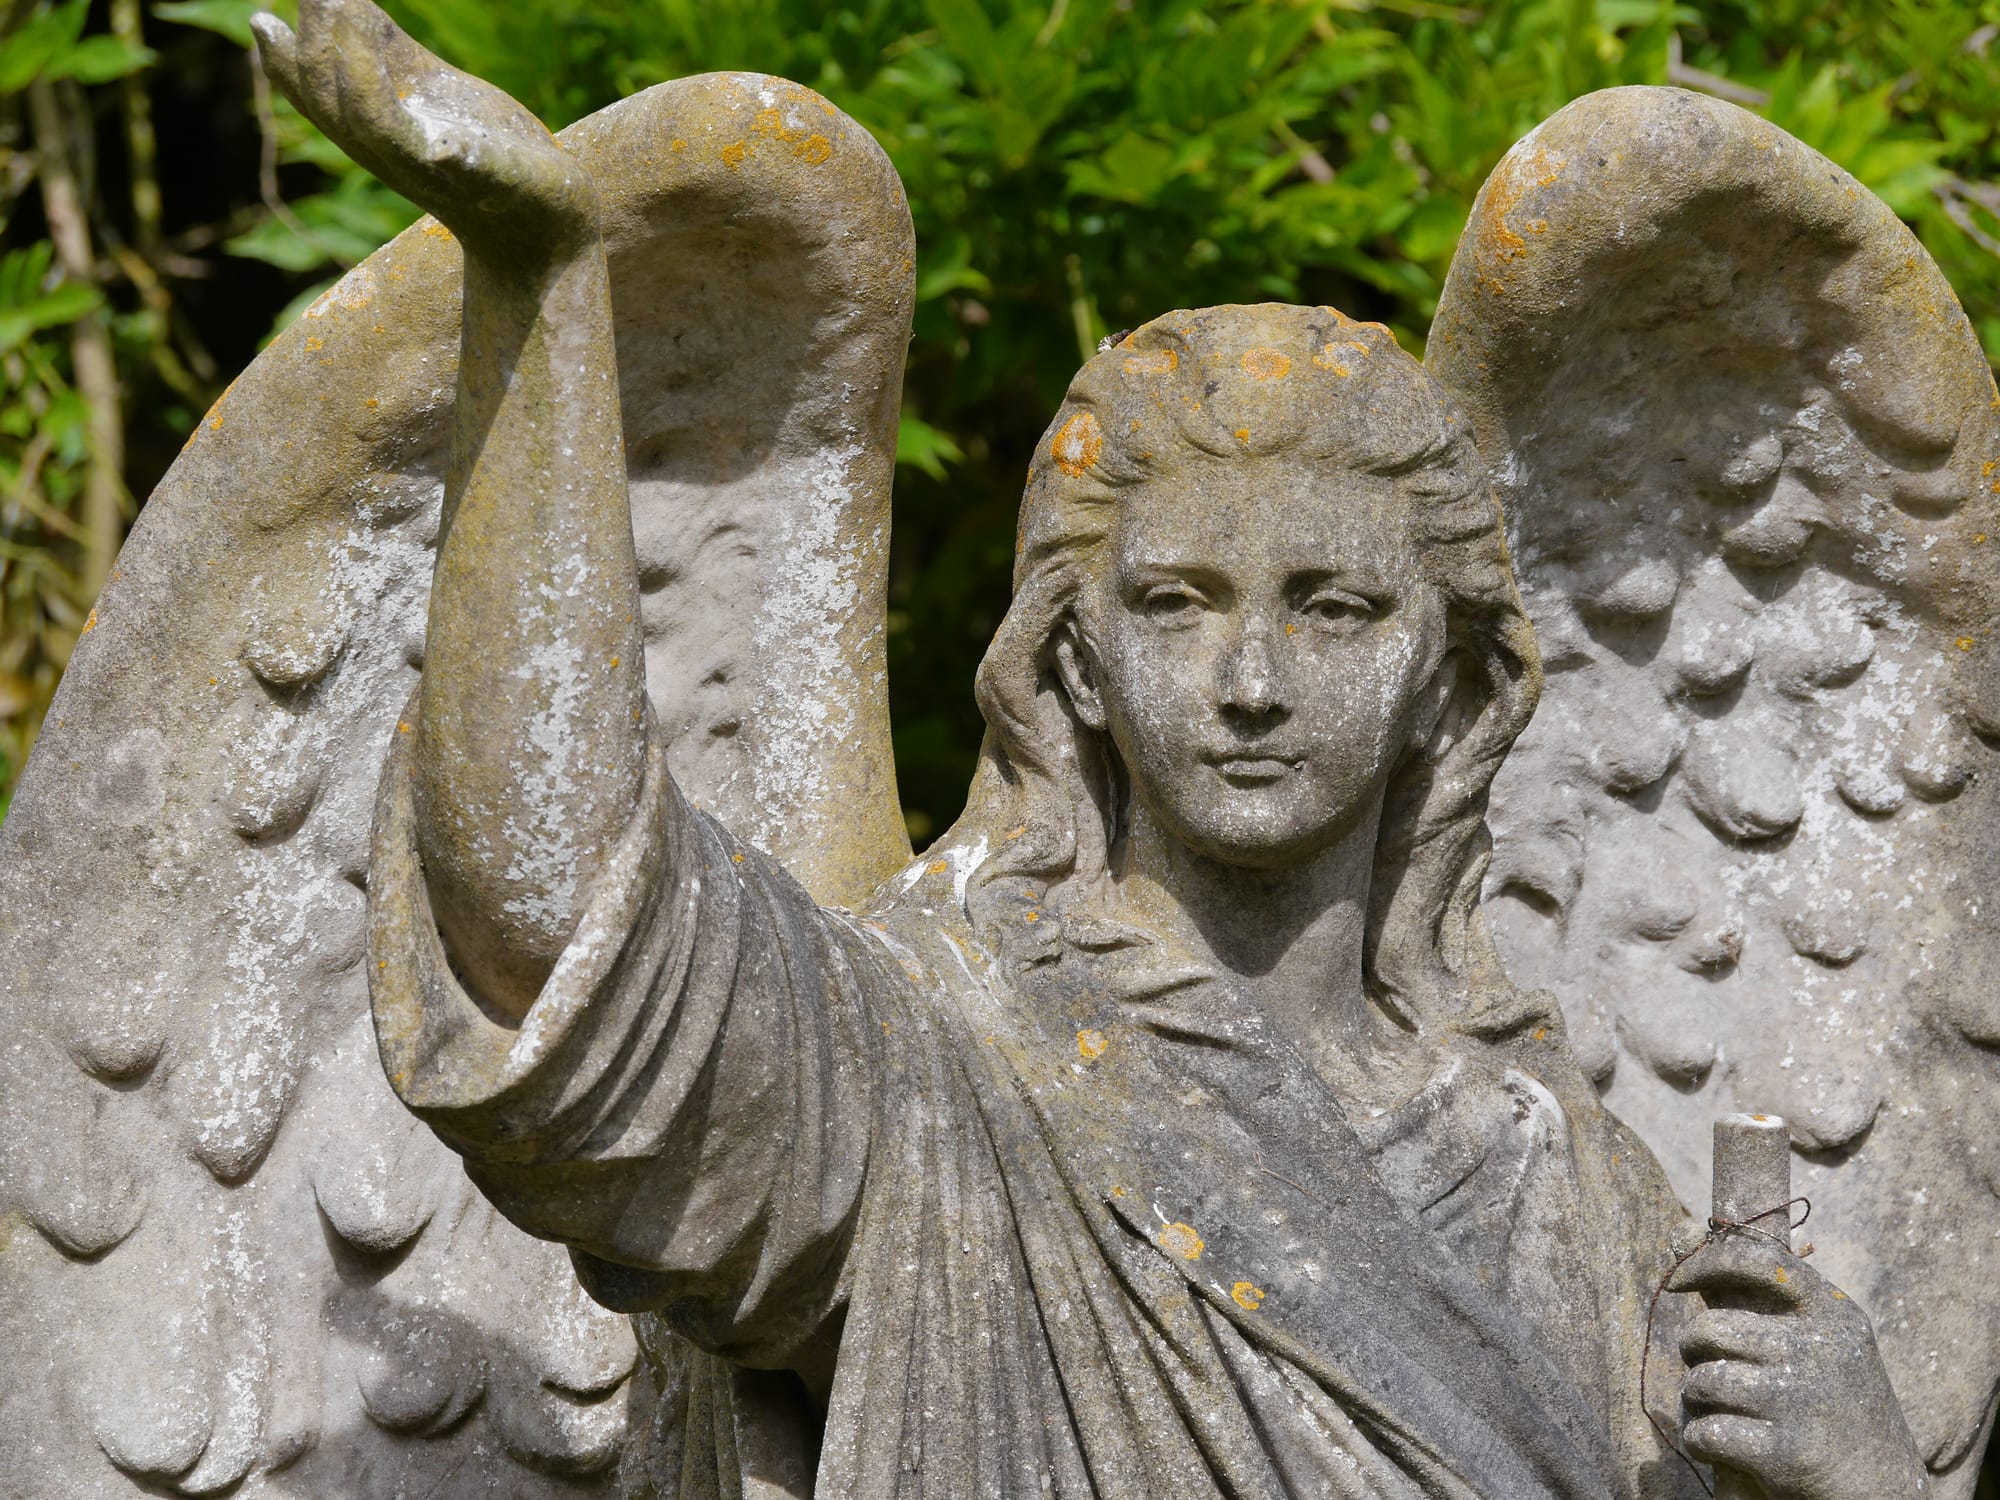 Photo by Author - an angel at St. Nicholas, Remenham Lane, Remenham, Henley-on-Thames, UK